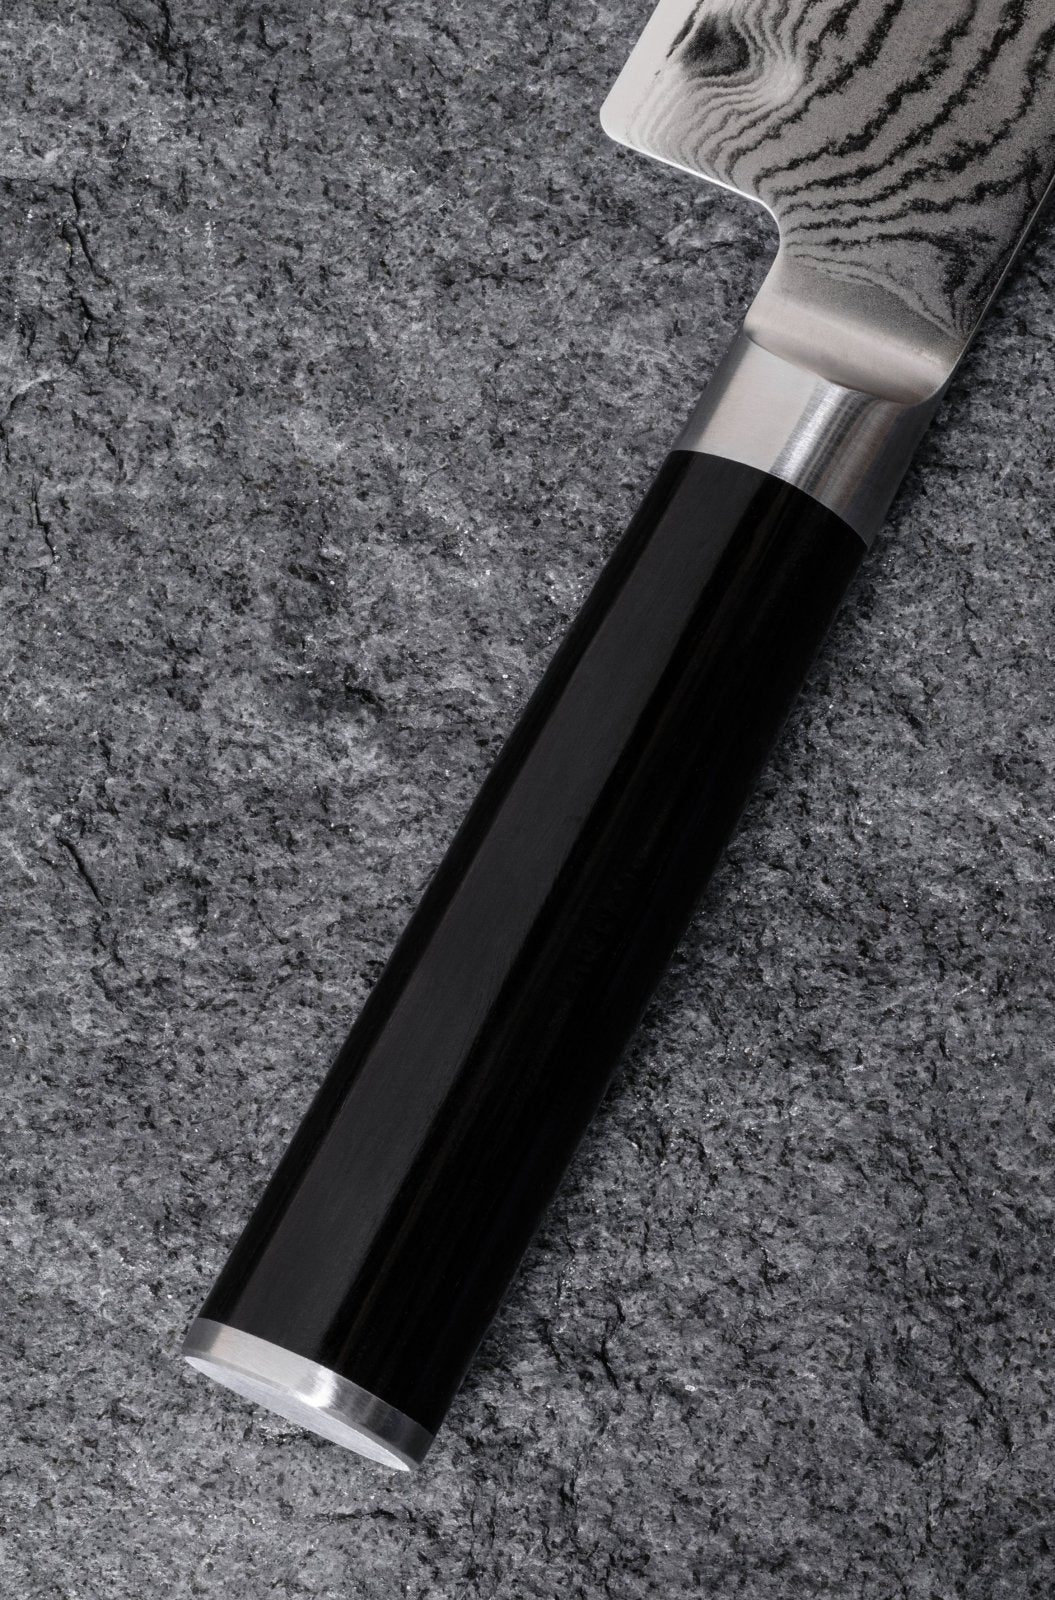 KAI Shun 12cm Steak Knife - KAI-DM-0711 - The Cotswold Knife Company